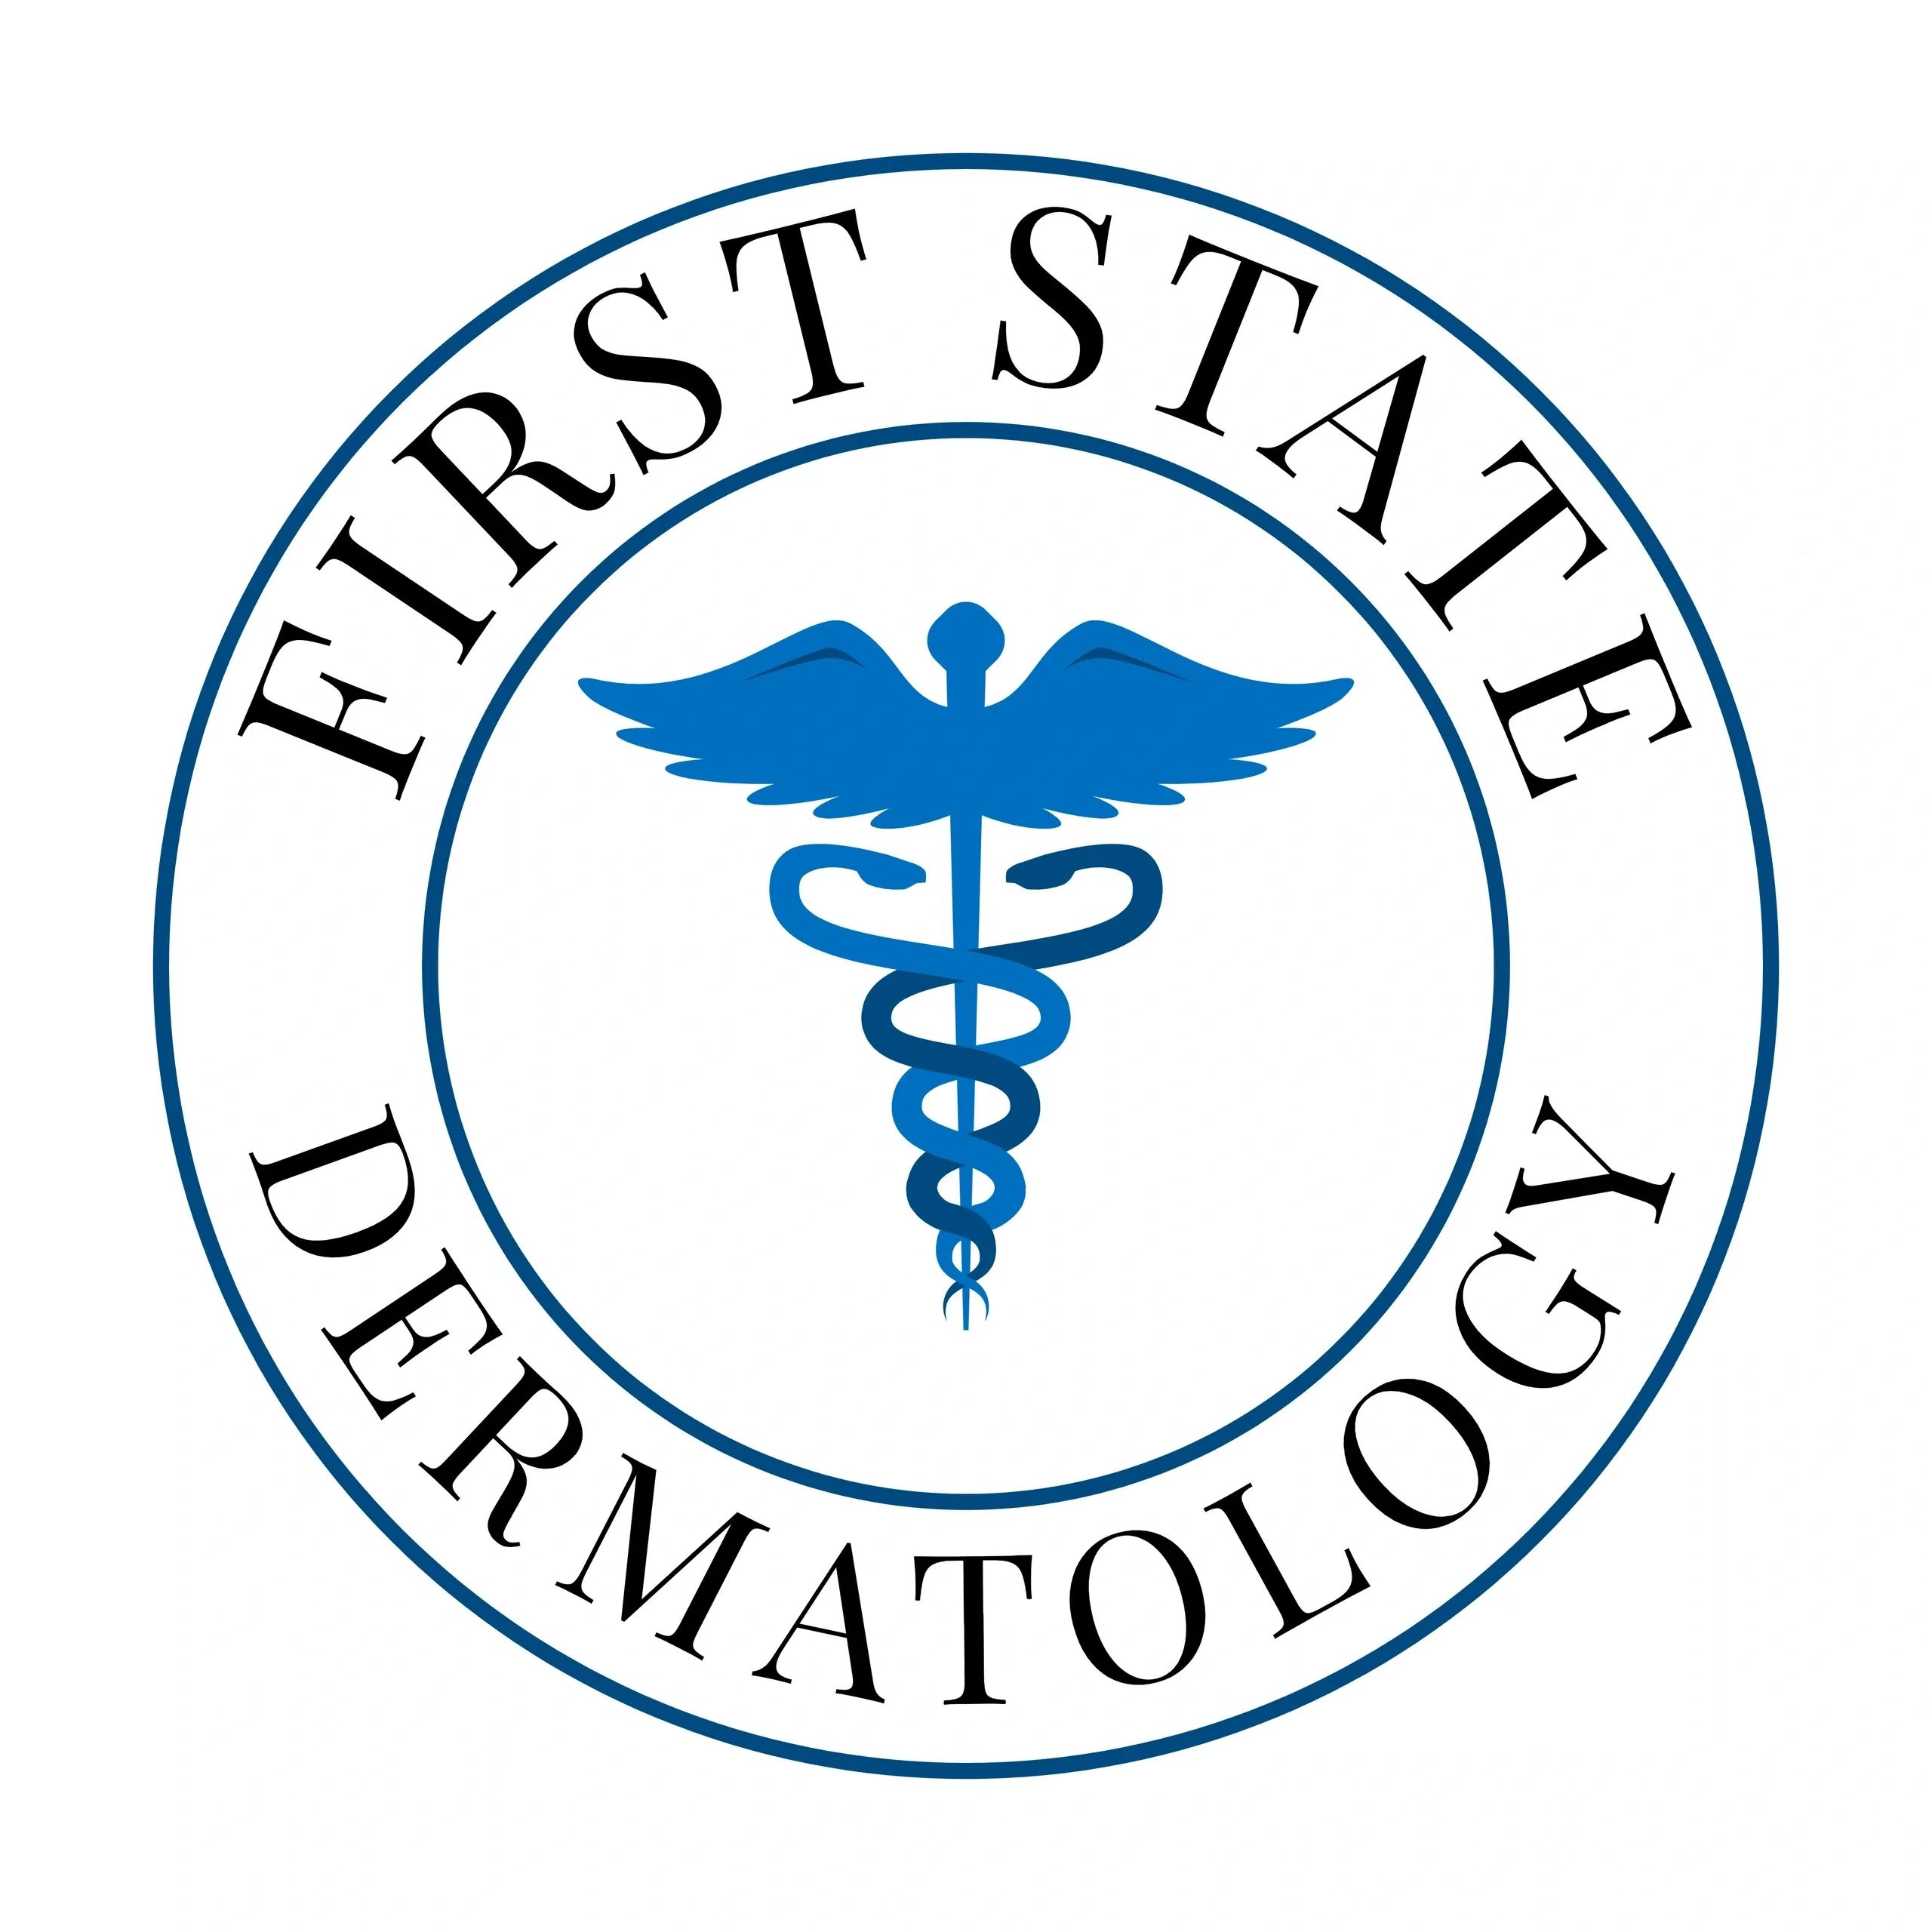 dermatologist symbol